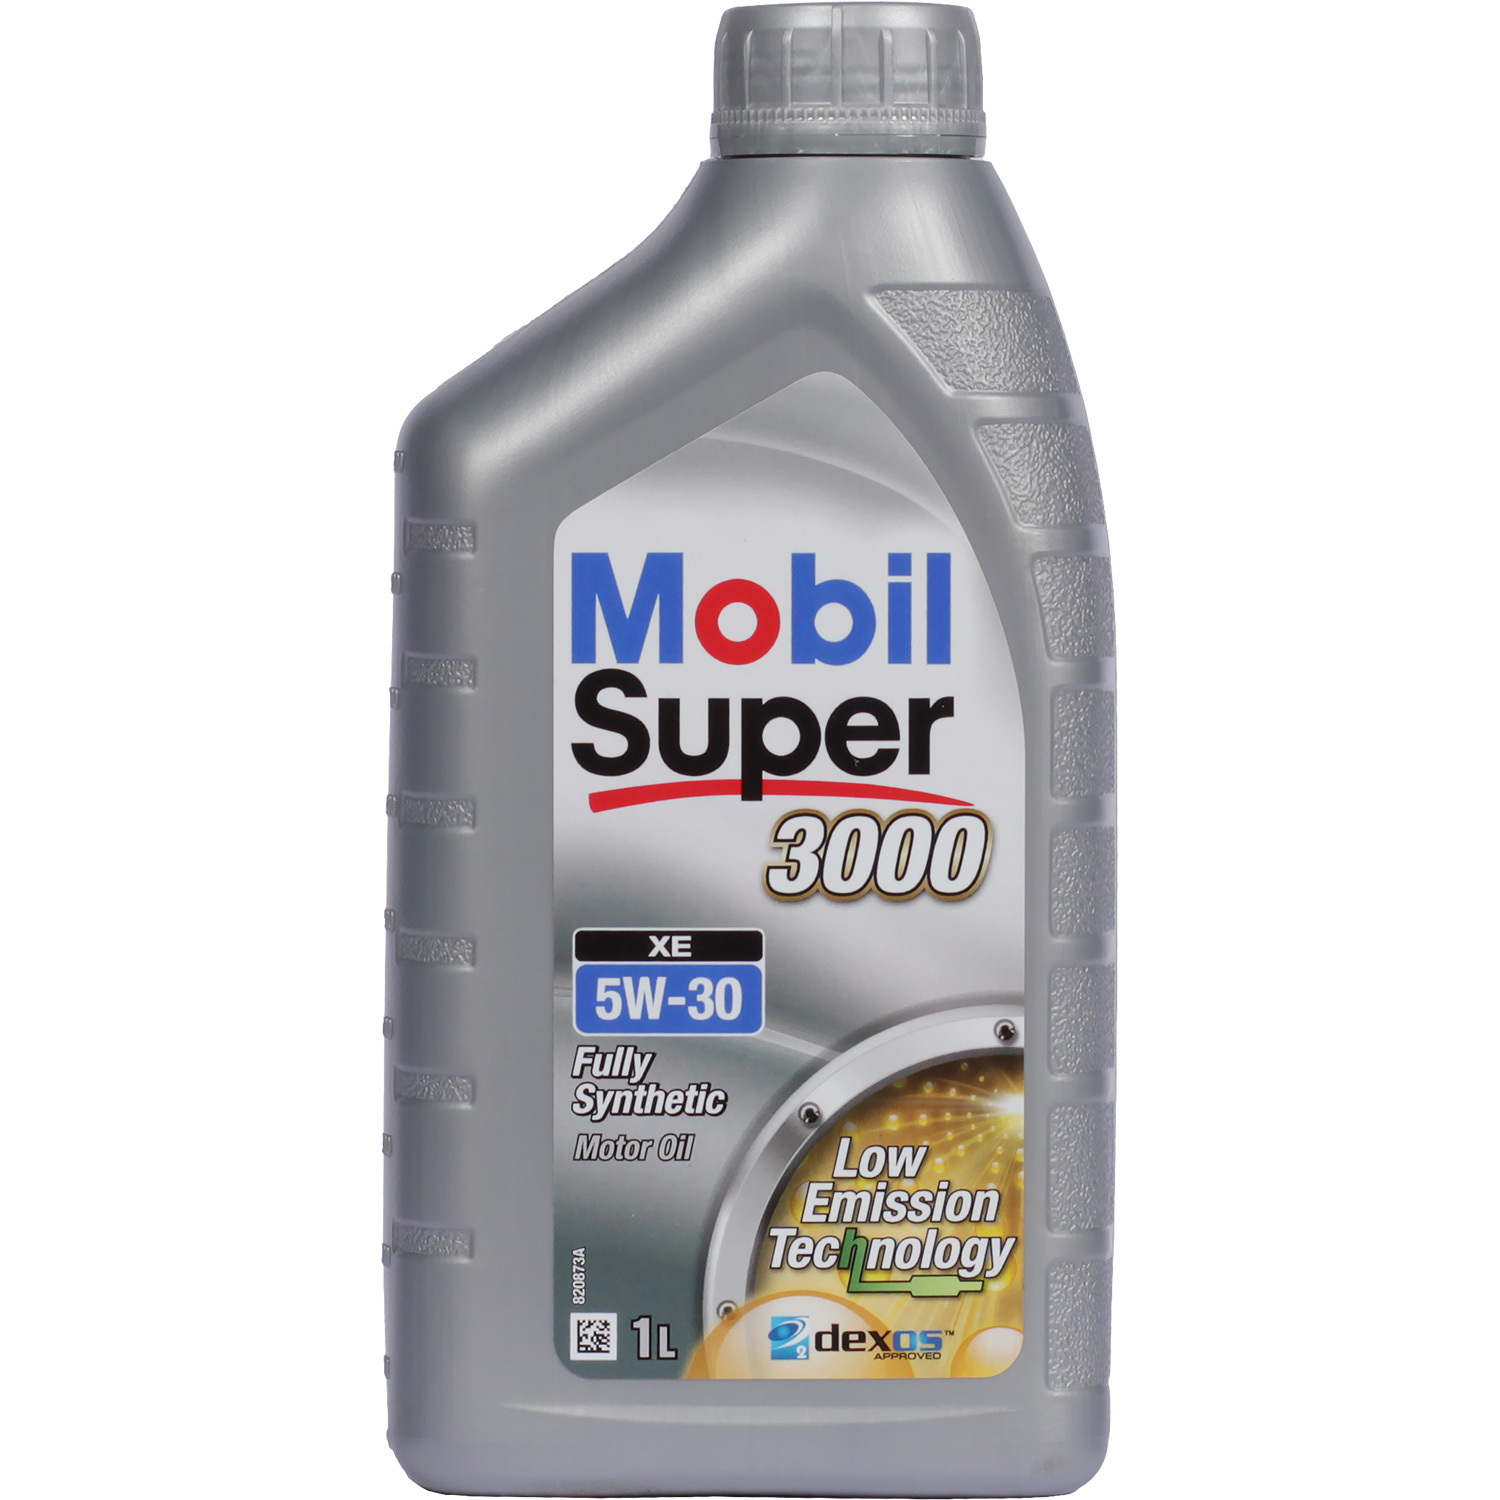 Mobil Моторное масло Mobil Super 3000 XE 5W-30, 1 л масло моторное mobil super 3000 xe 5w 30 4 л